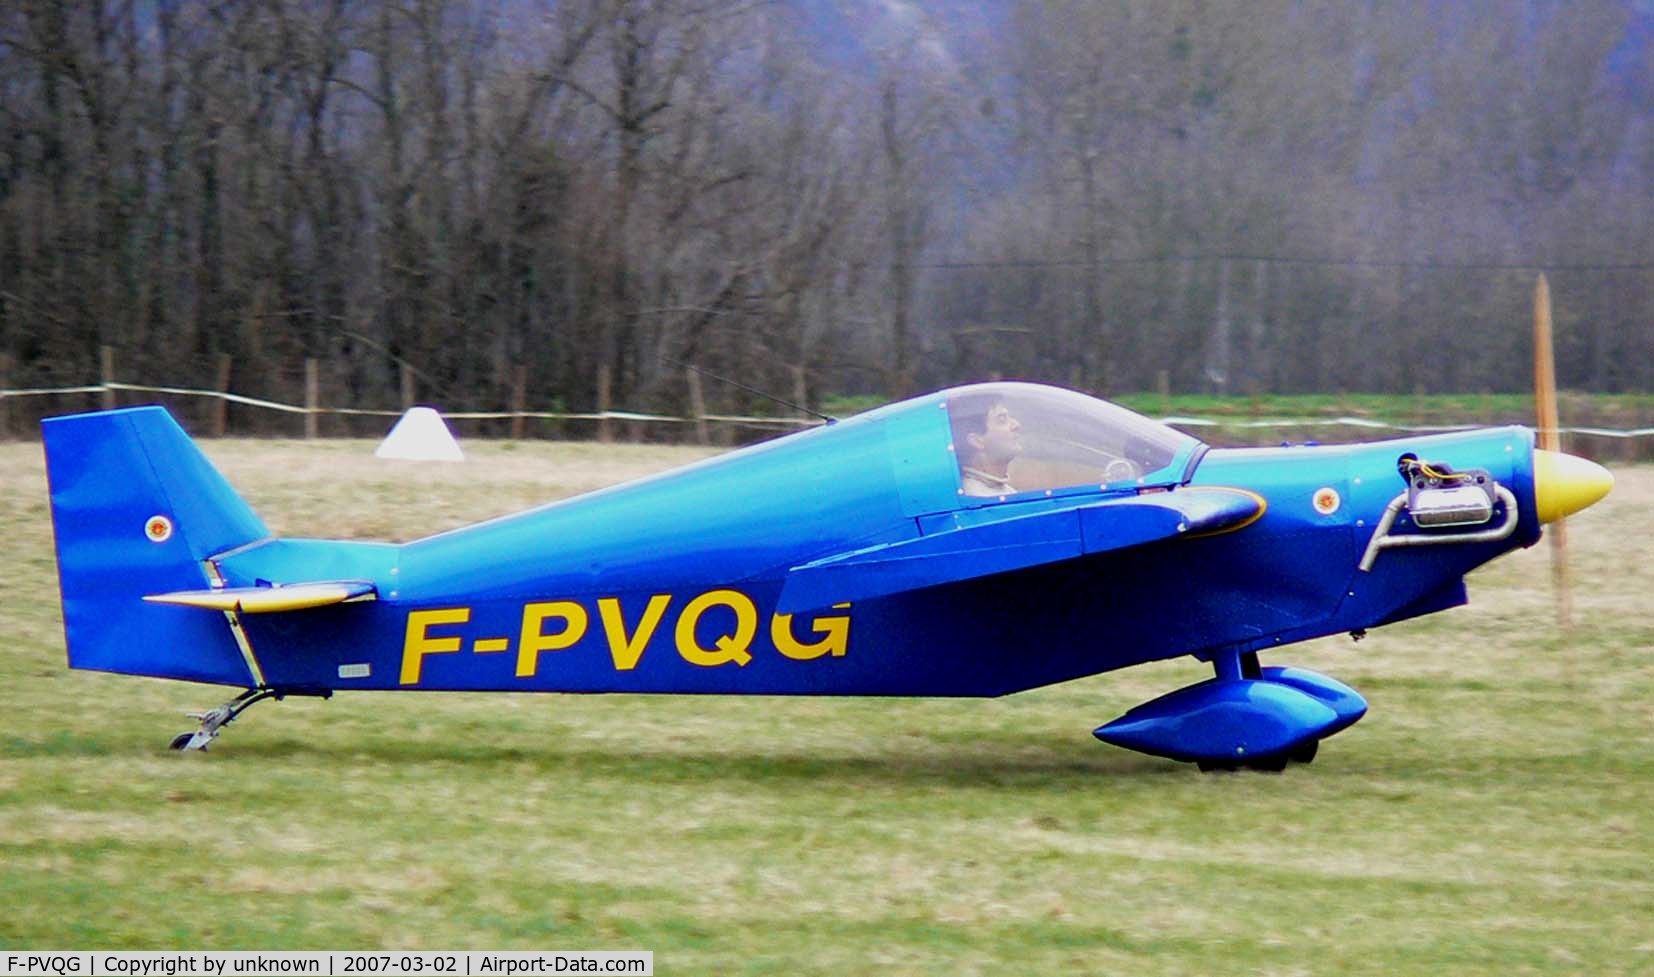 F-PVQG, Pottier P-70 C/N 01, single seater, volkswagen engine